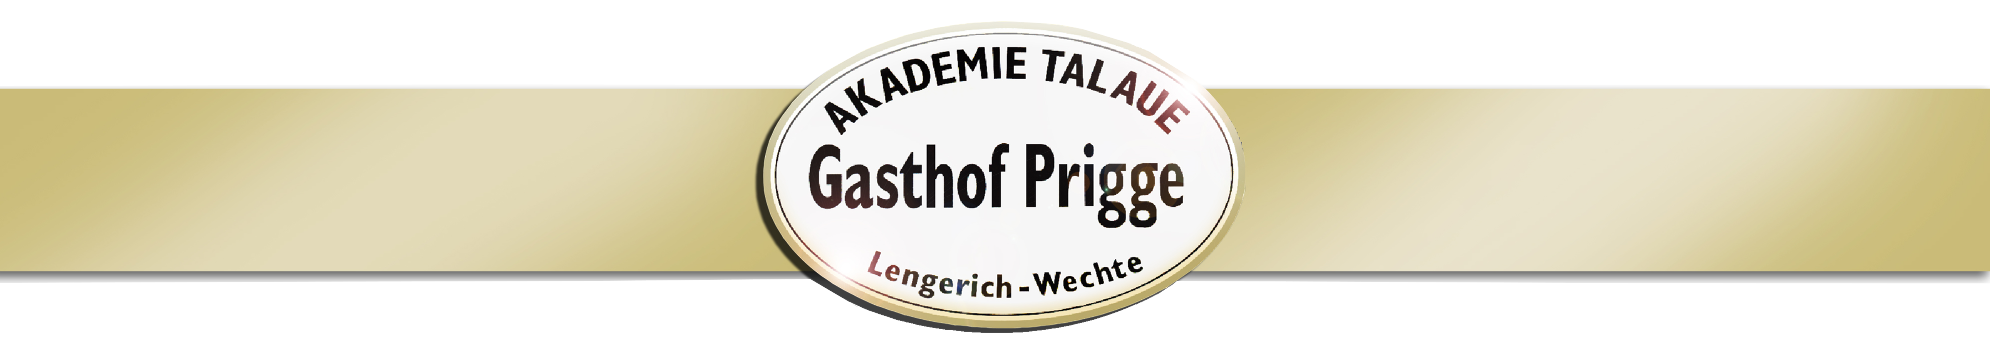 Gasthof-Prigge